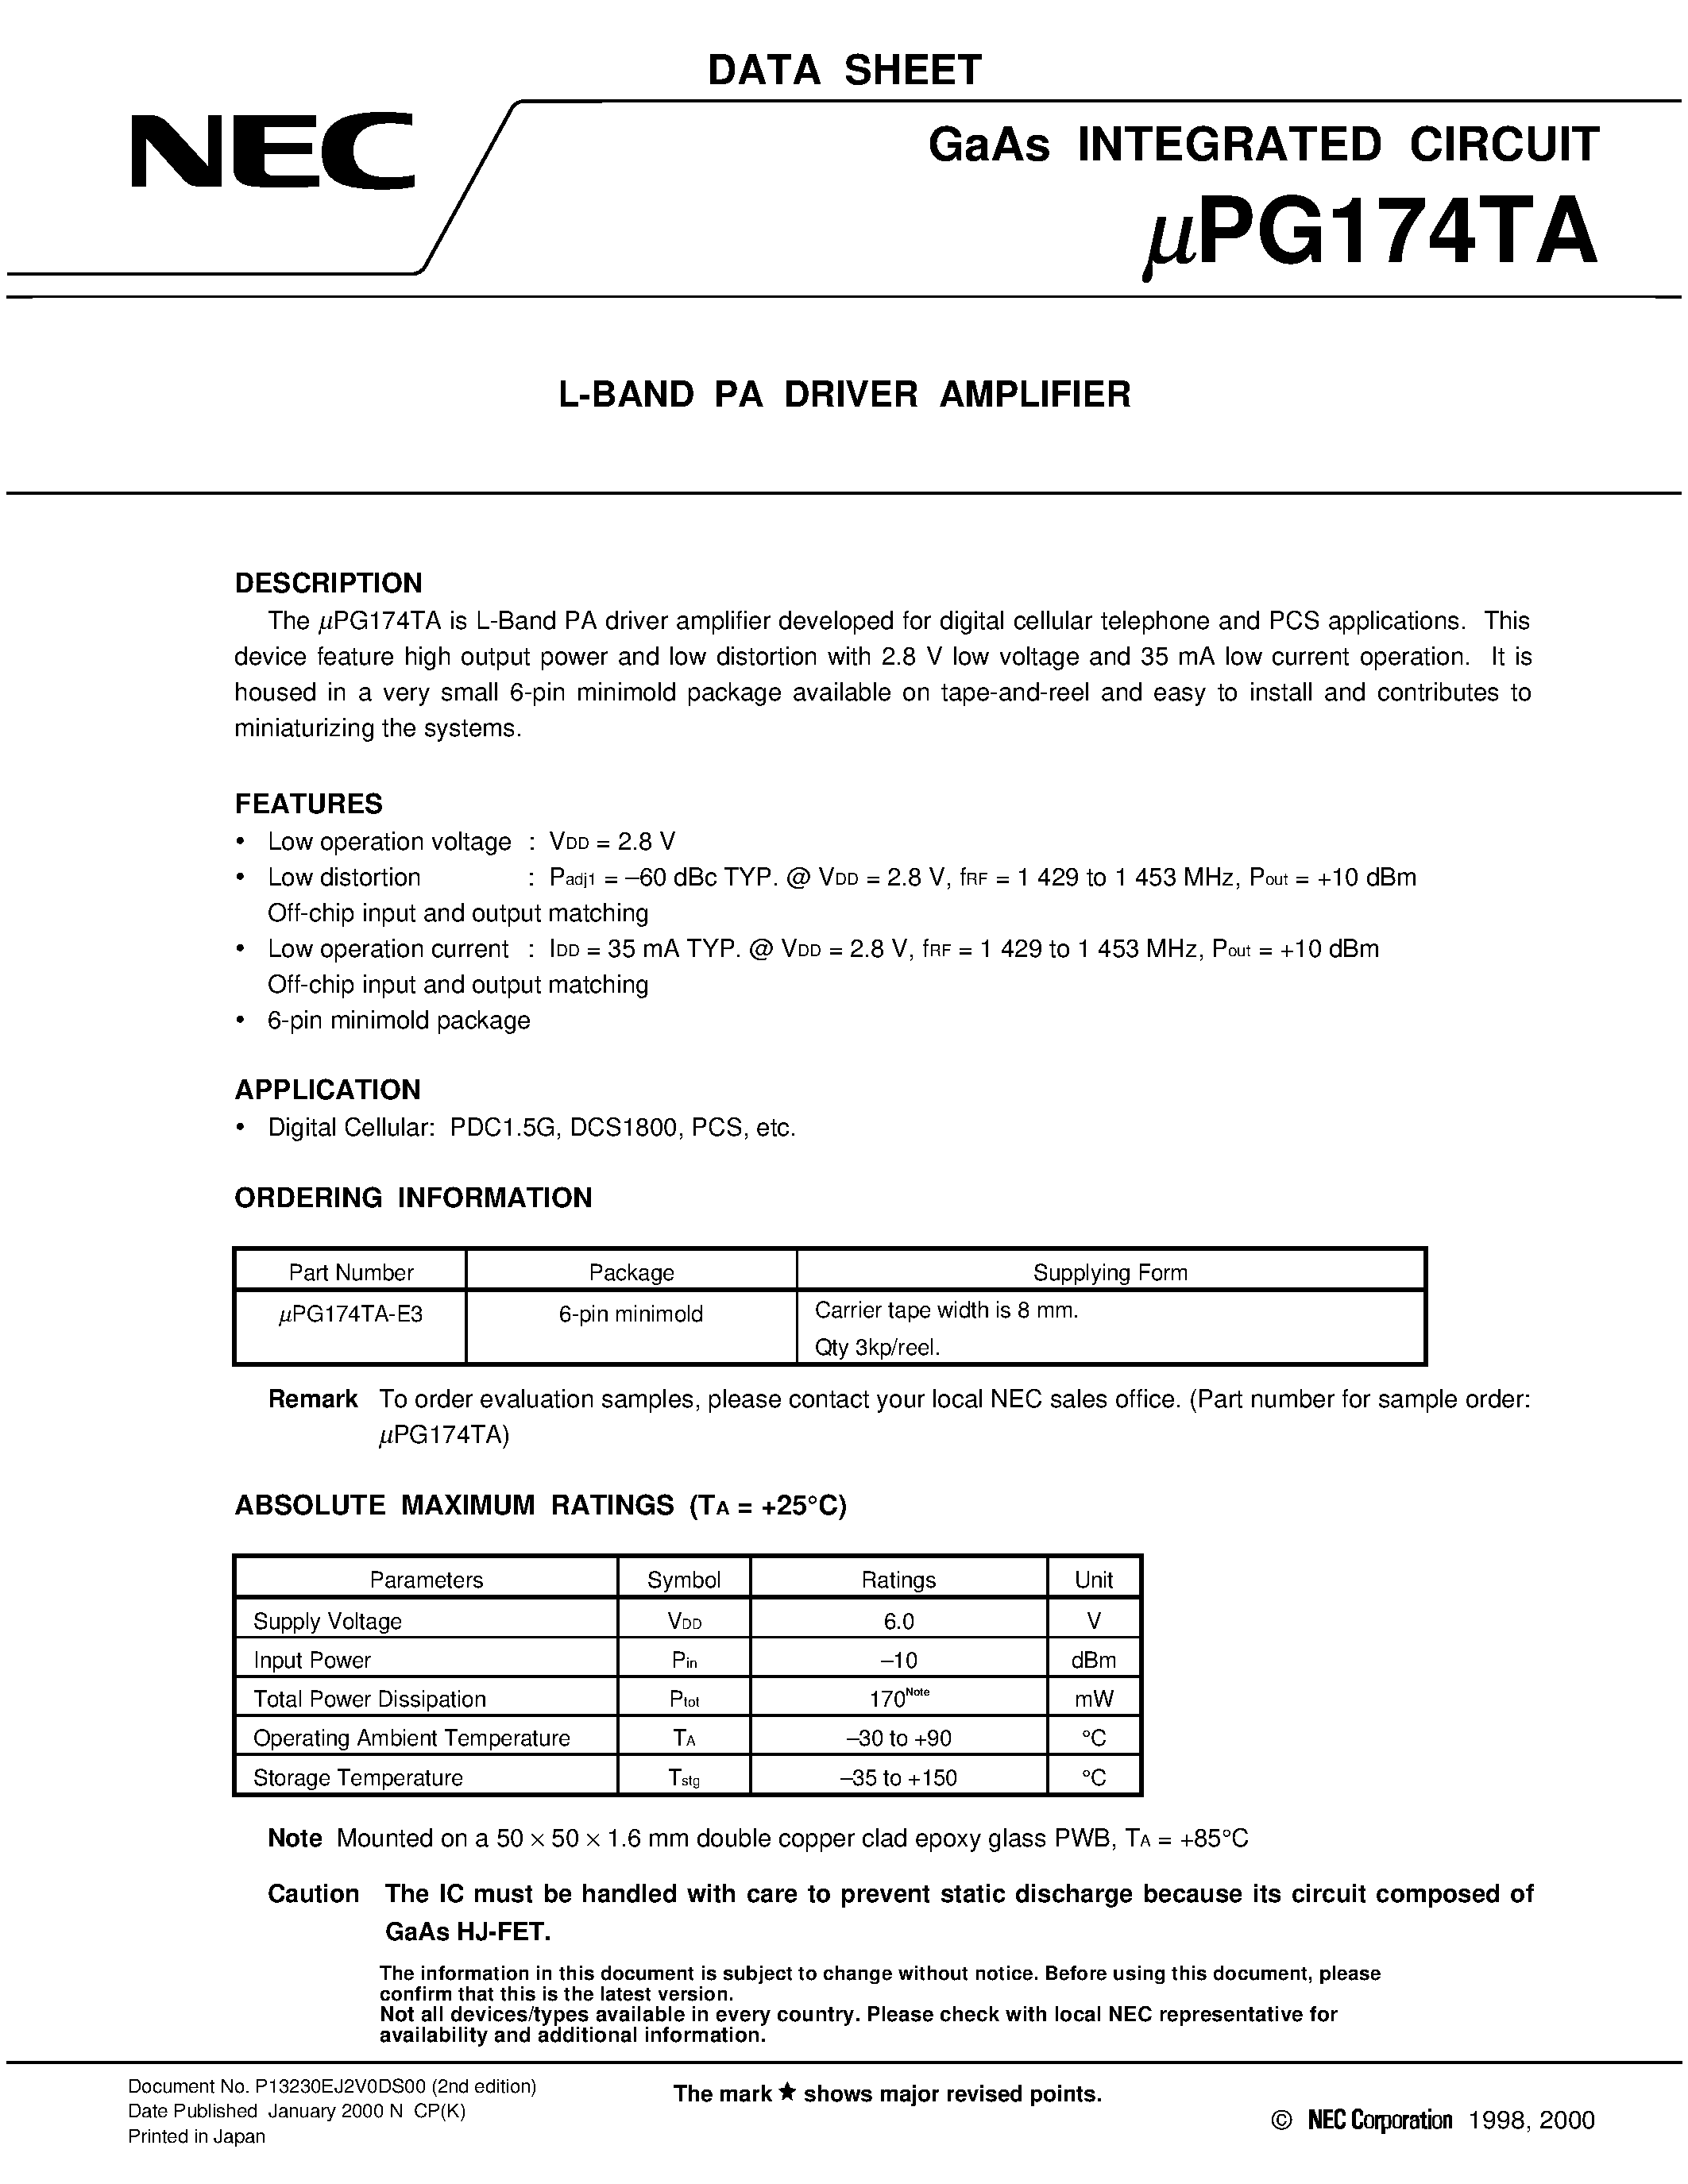 Datasheet UPG174TA-E3 - L-BAND PA DRIVER AMPLIFIER page 1